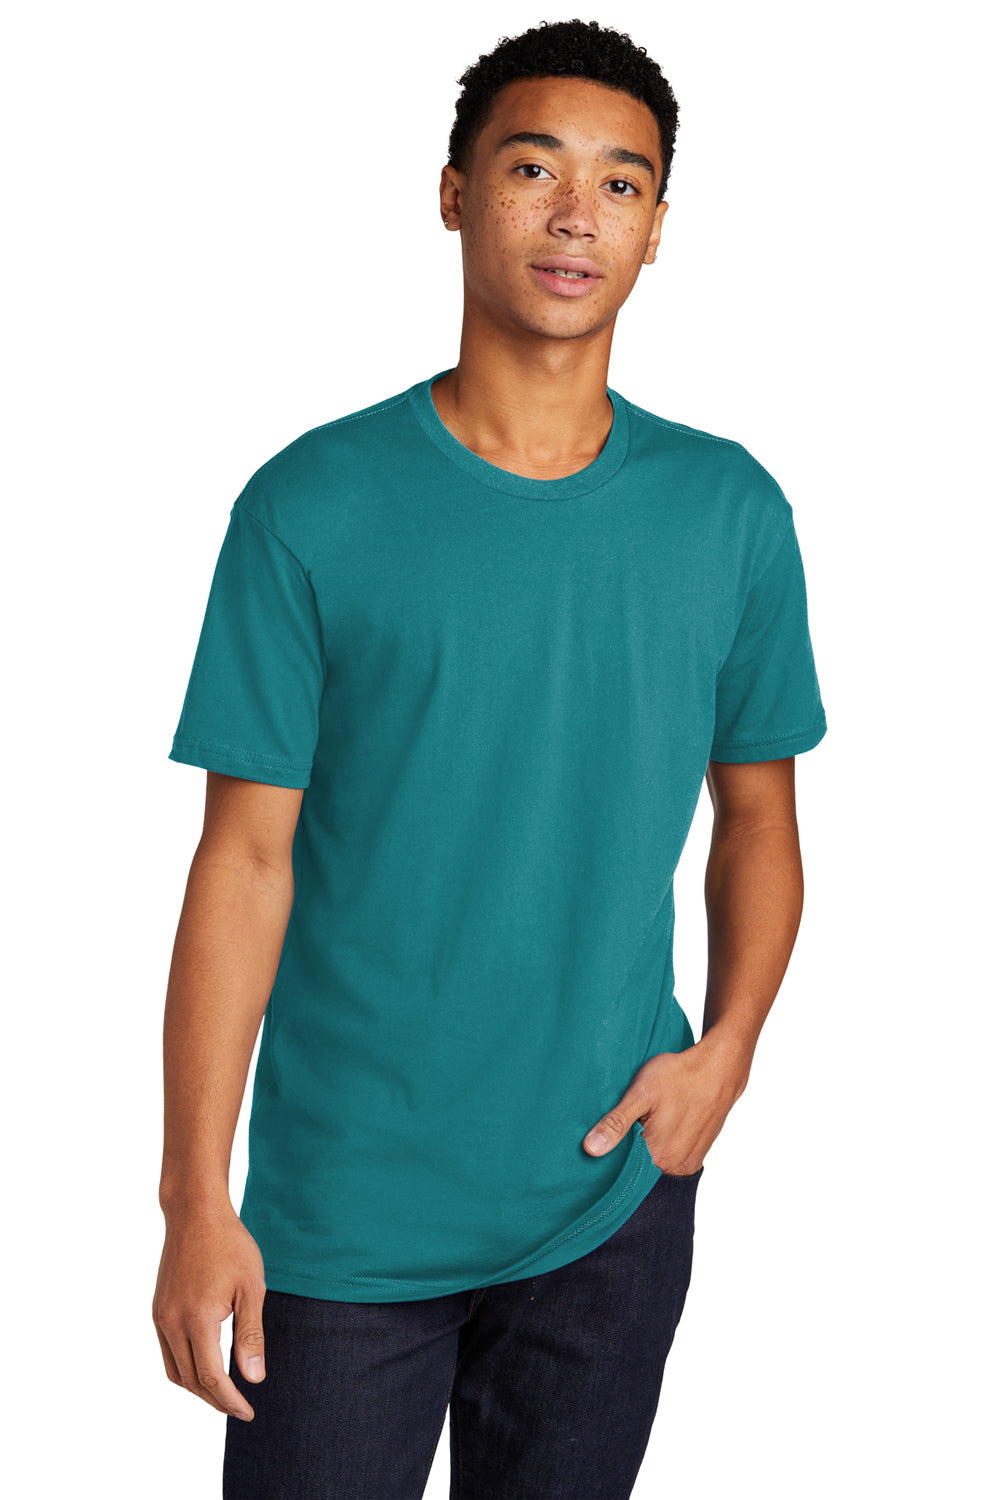 Next Level NL3600/3600 Mens Fine Jersey Short Sleeve Crewneck T-Shirt Teal Blue Front